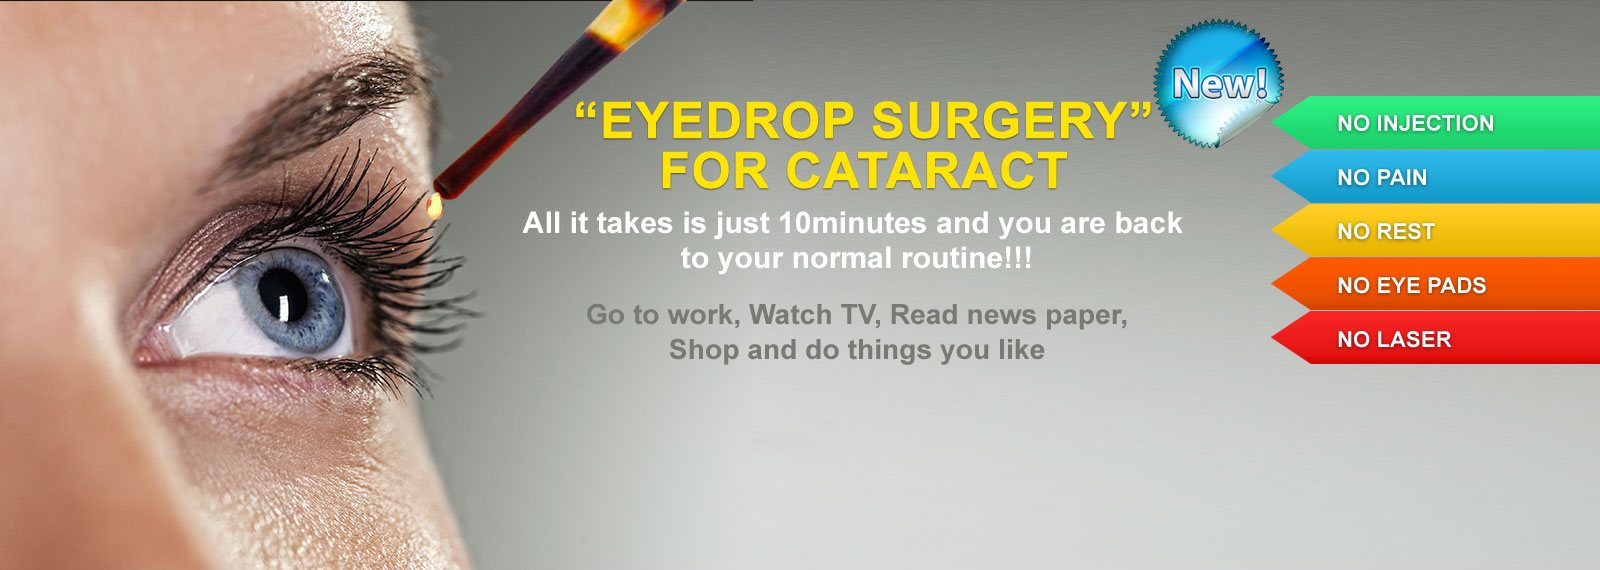 Eye Drop Surgery For Cataract